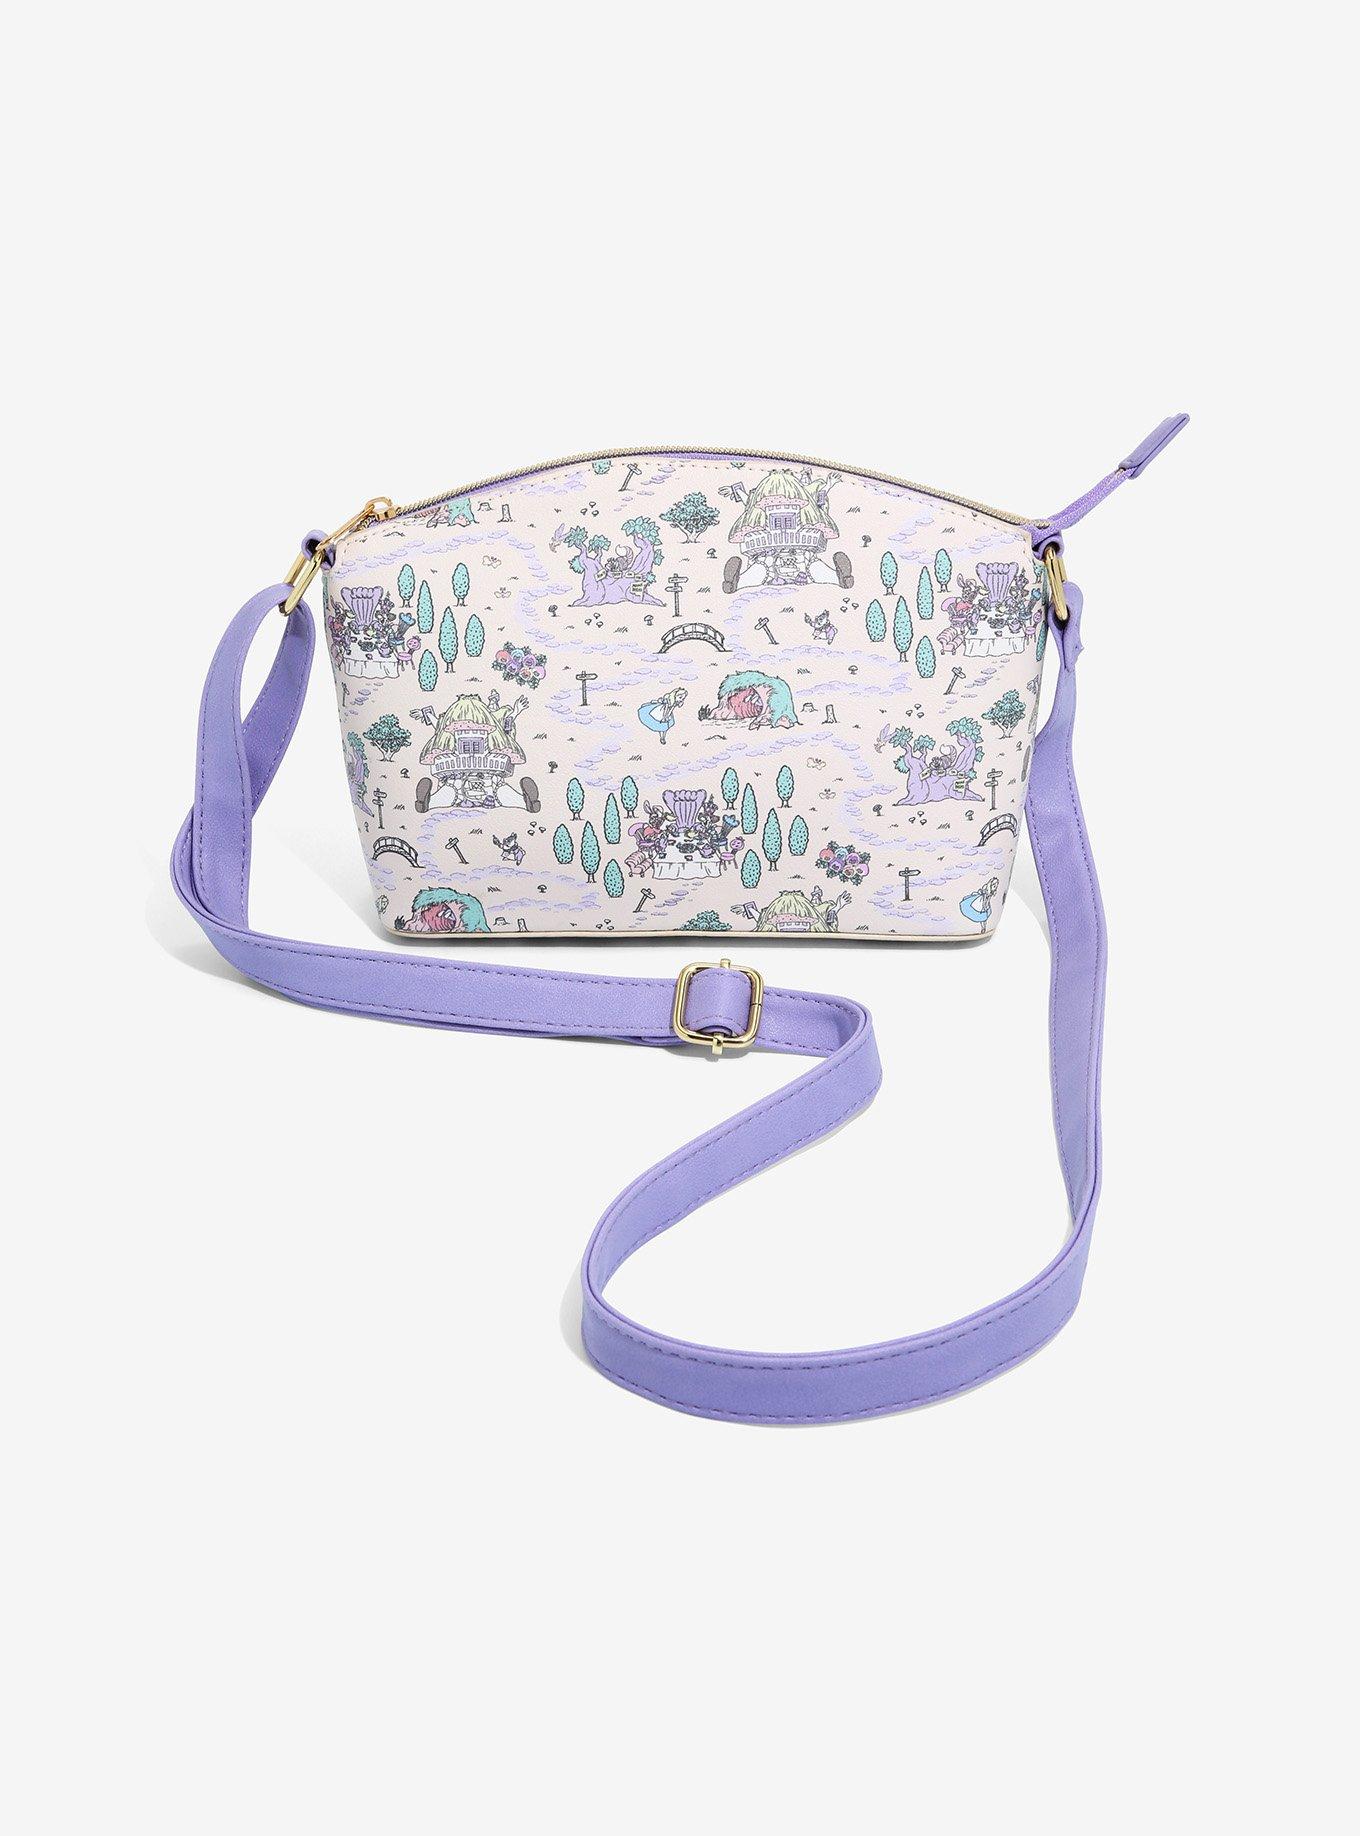 Loungefly Disney Alice in Wonderland Pastel Map Mini Backpack